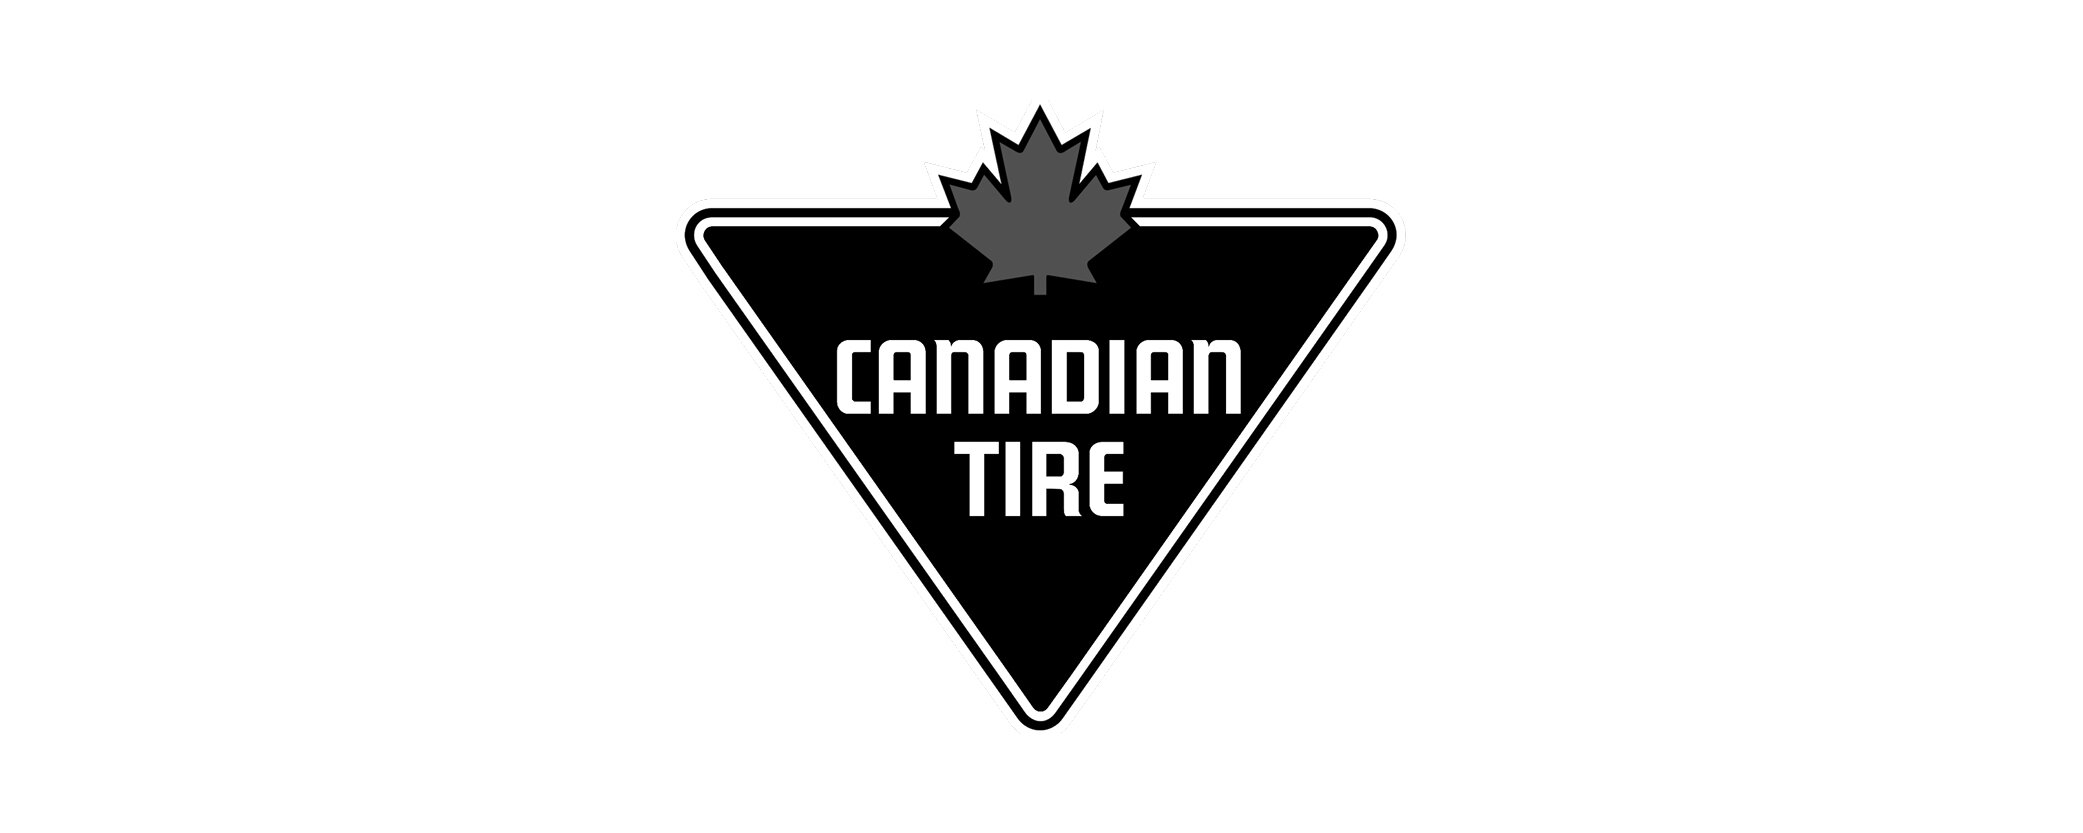 canadian tire website logo.jpg